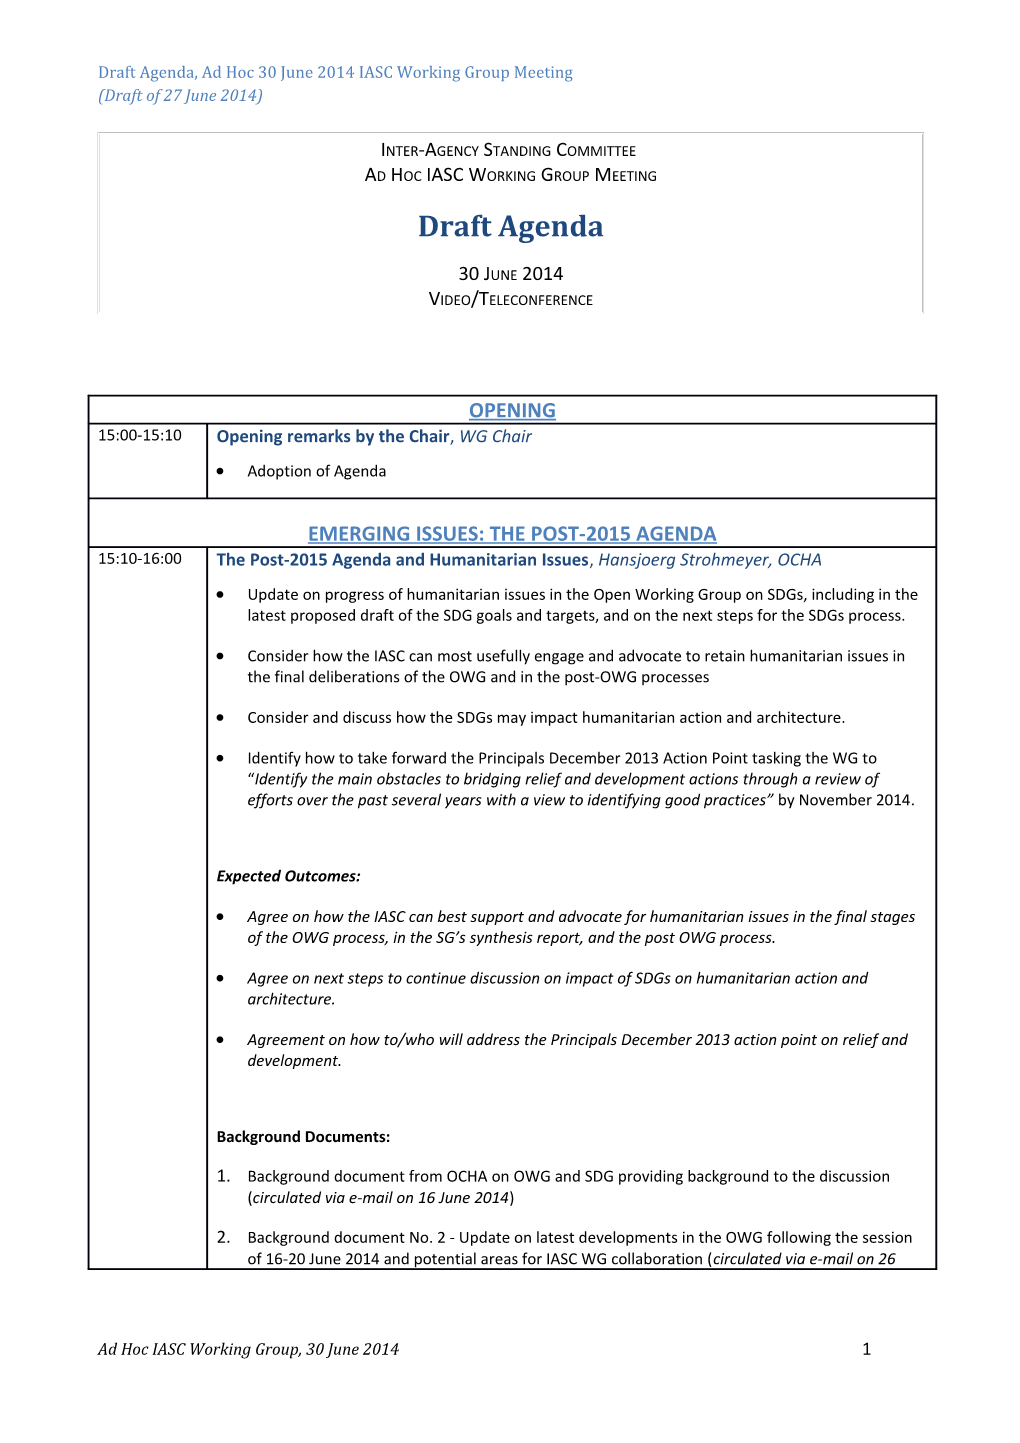 Draft Agenda, 86Th IASC Working Group Meeting